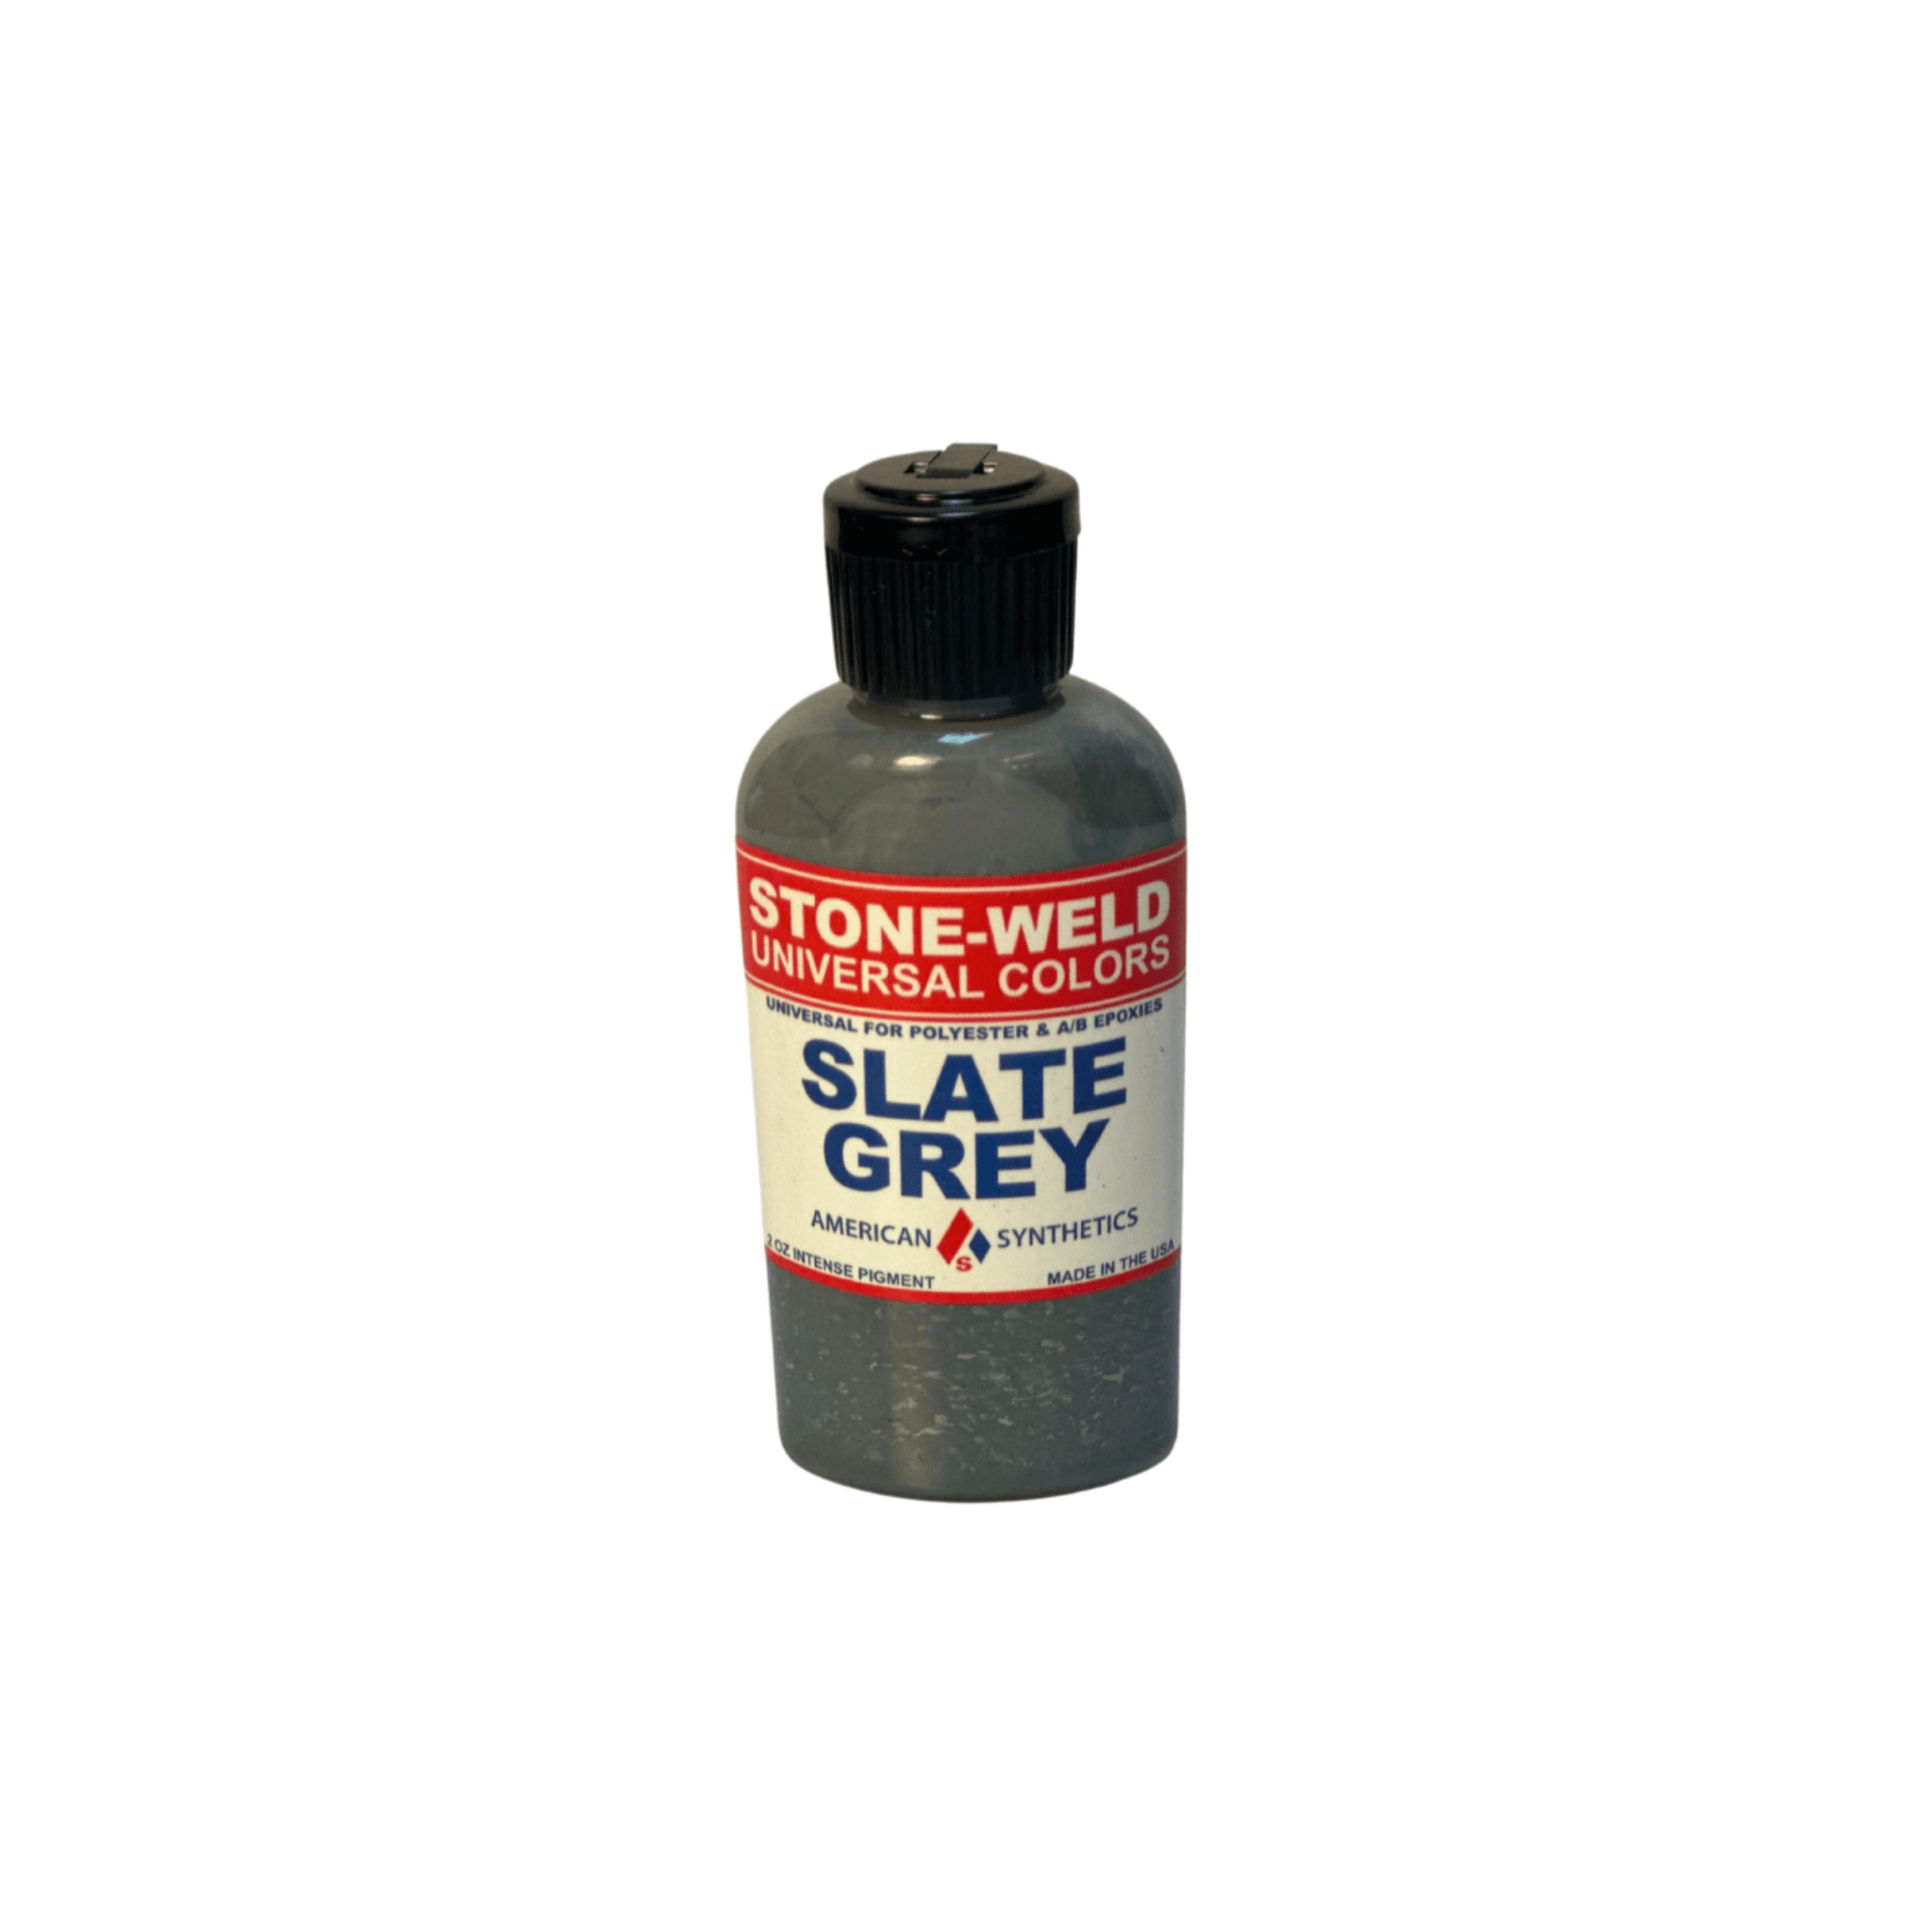 Stone-Weld 2 oz. Universal Color, Slate Grey - Direct Stone Tool Supply, Inc